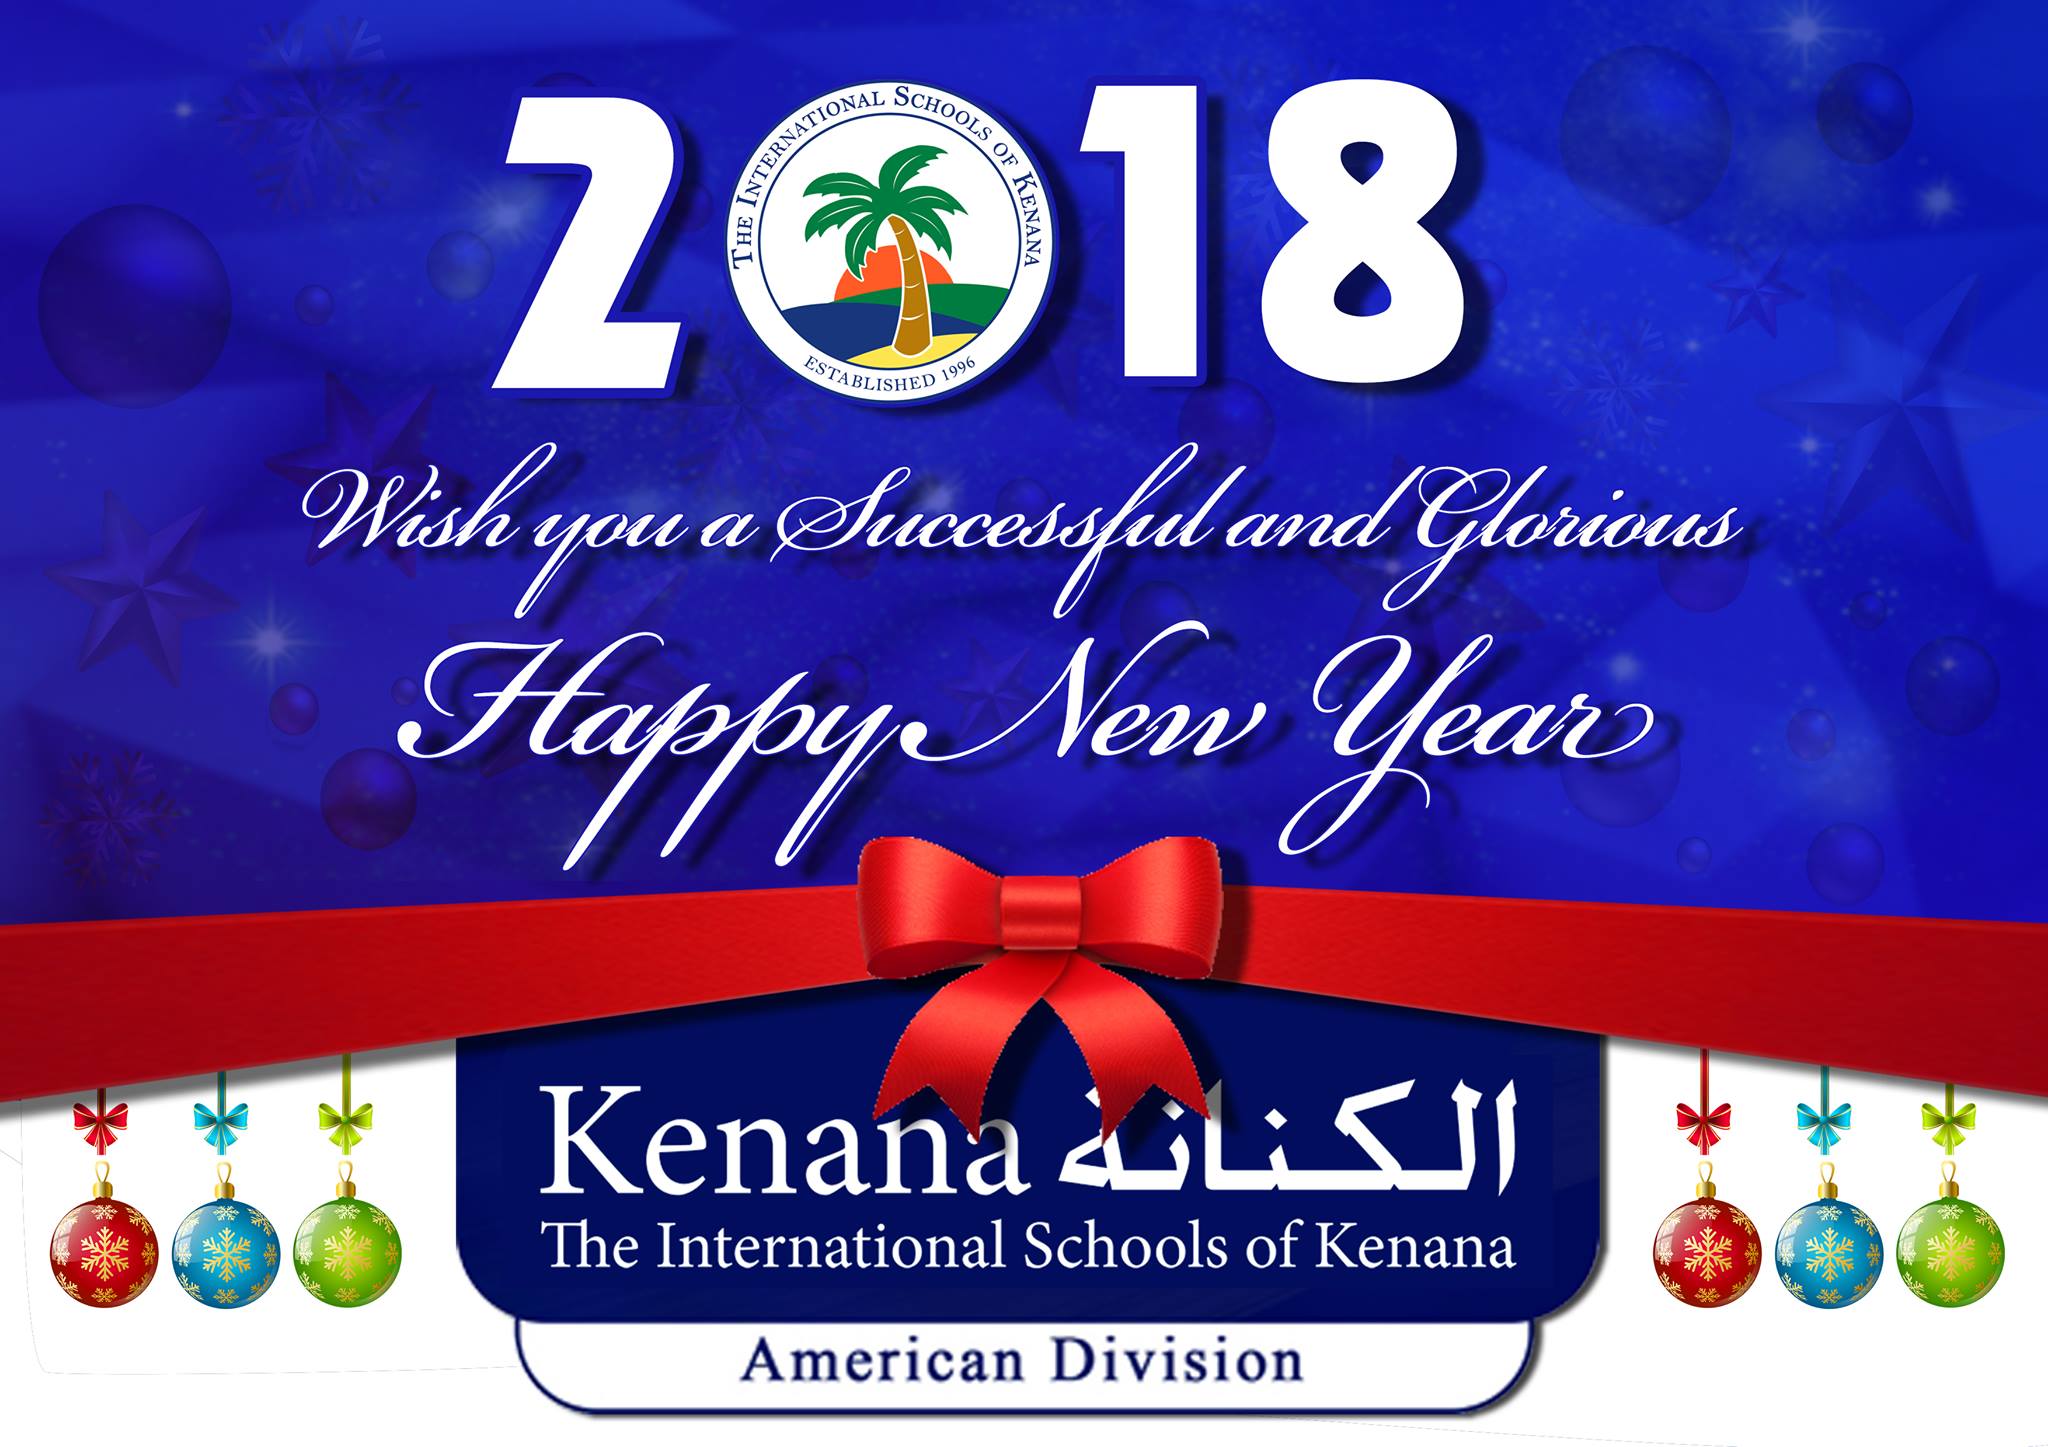 International Schools of kenana | American Division - Happy New Year 2018